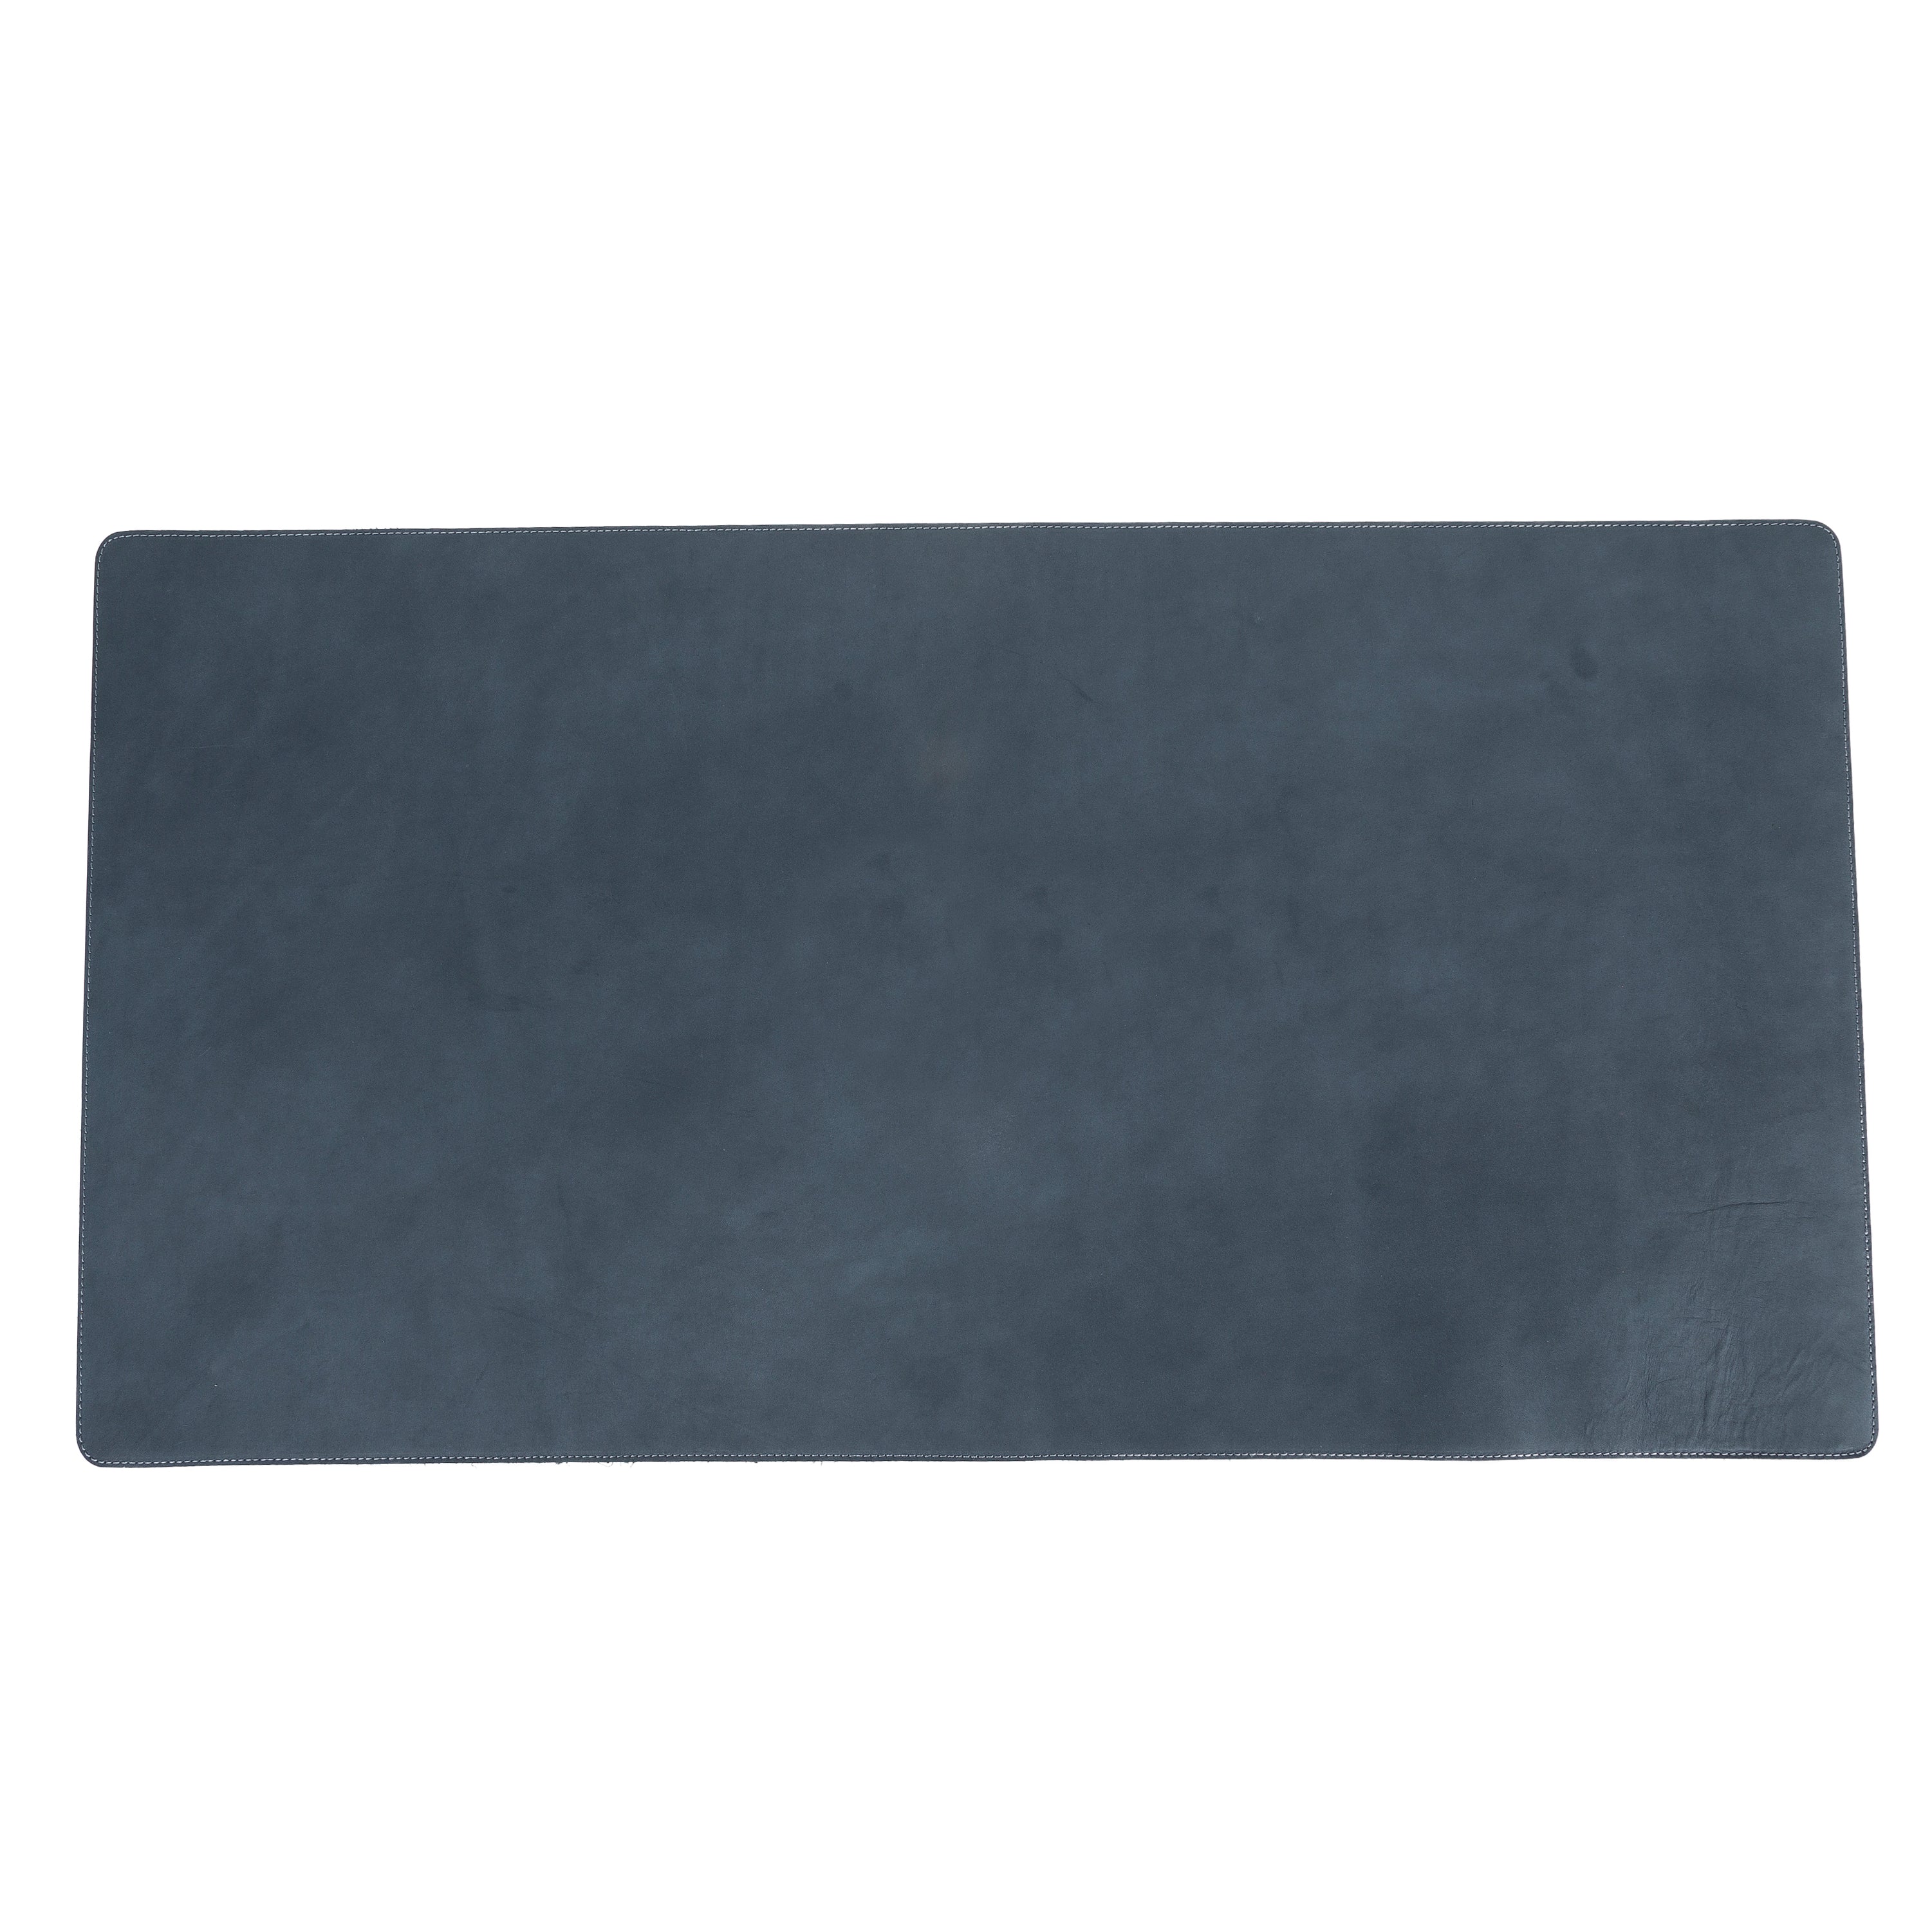 DelfiCase Genuine Blue Leather Deskmat, Computer Pad, Office Desk Pad 3